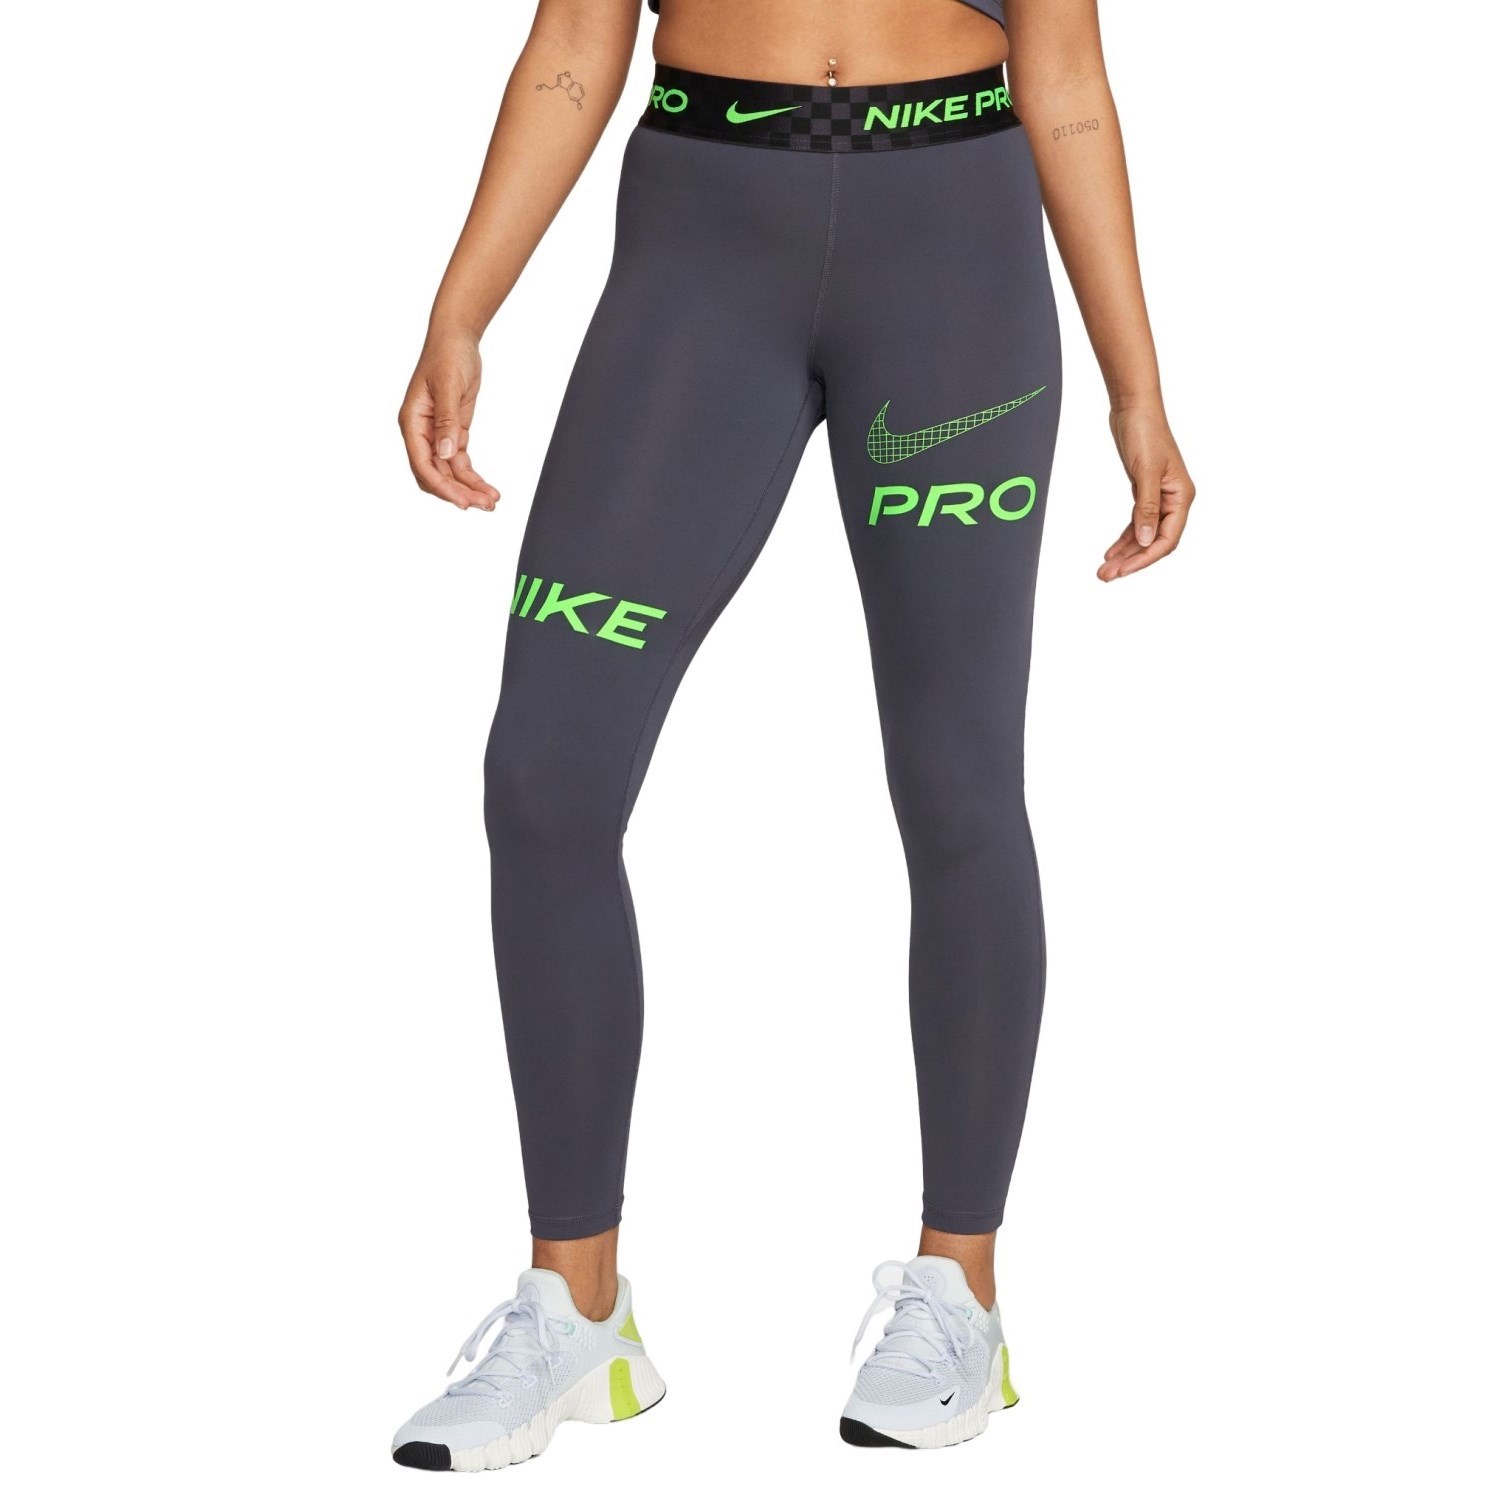 Nike Training Pro Dri-FIT leggings in black